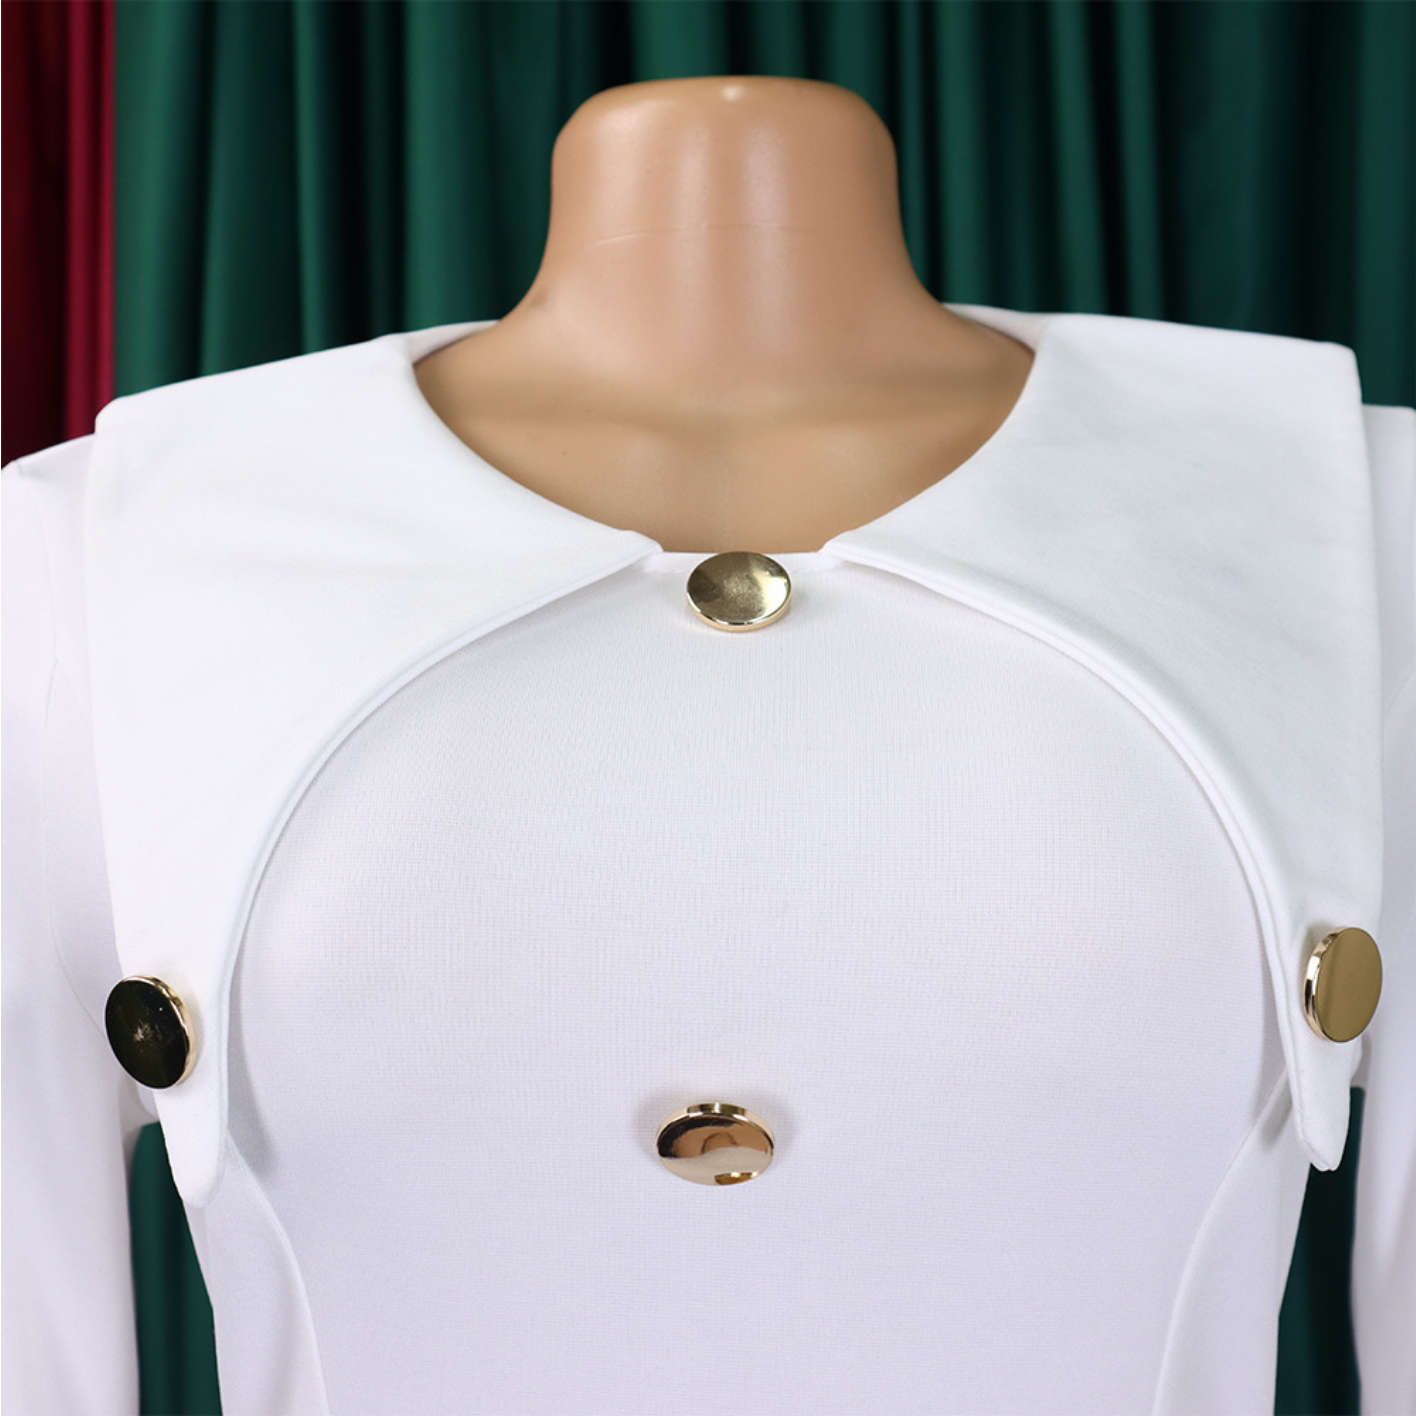 Elegant Long Sleeve Bodycon V Neck Button Flare Vintage Royal Blue Black White Claret Office Dress